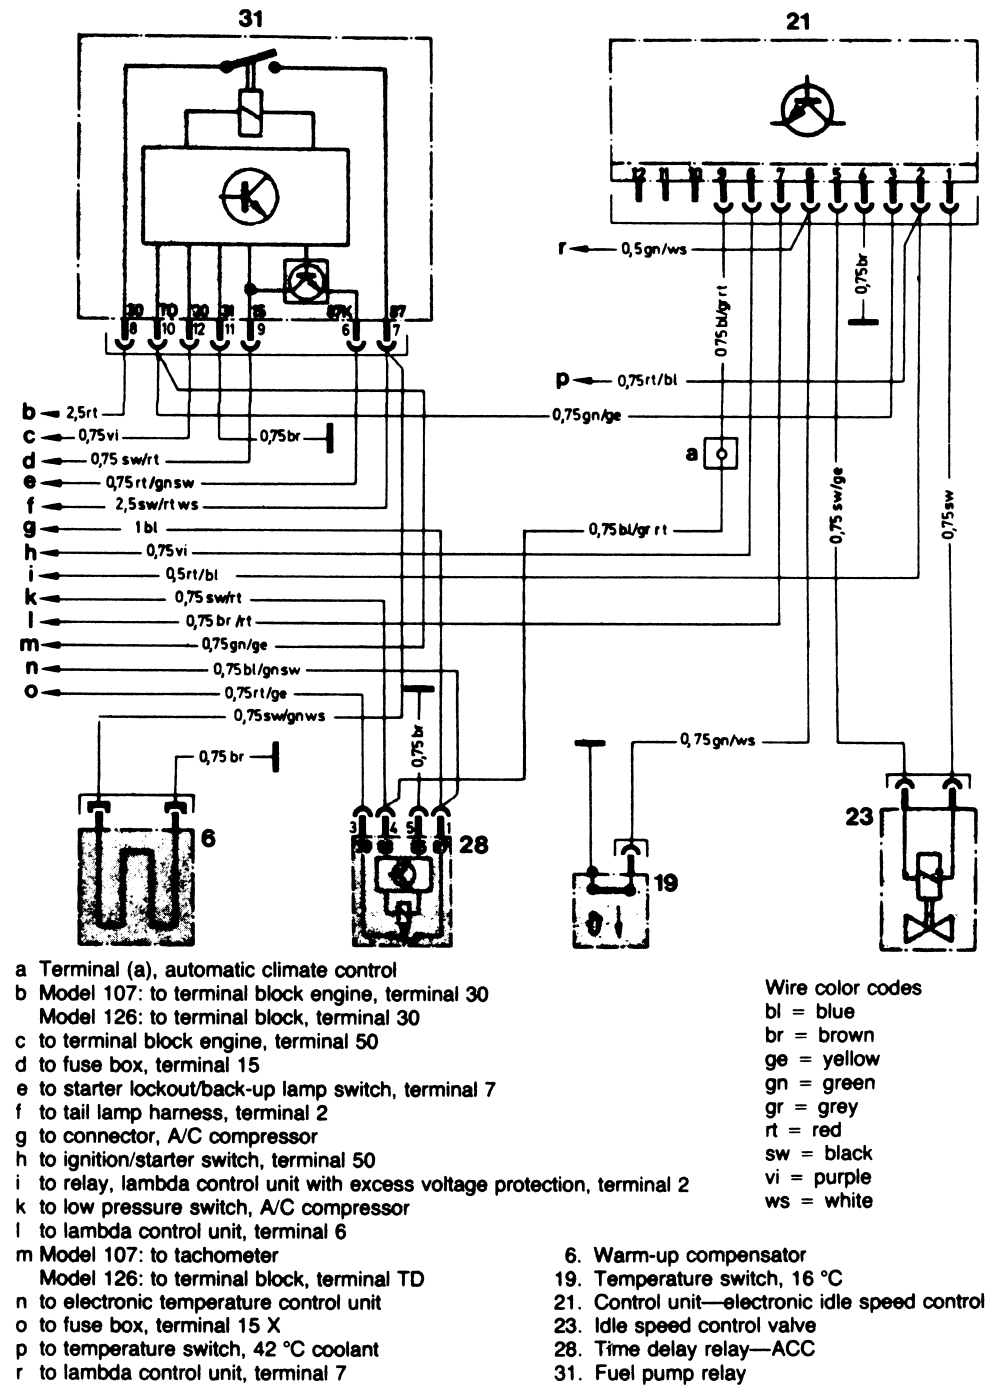 mercedes 280sl wiring diagram